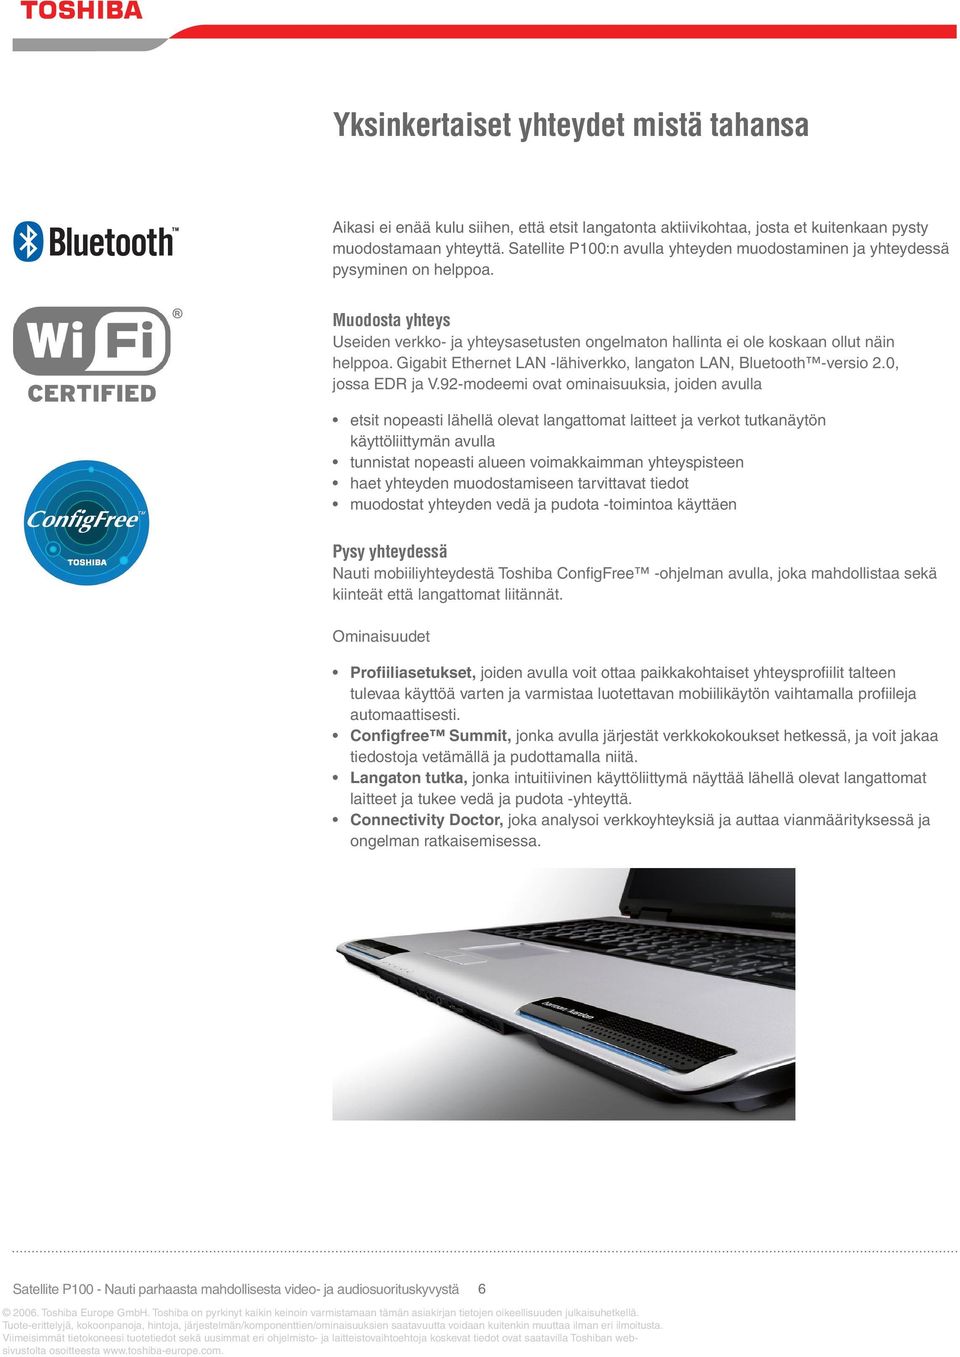 Gigabit Ethernet LAN -lähiverkko, langaton LAN, Bluetooth -versio 2.0, jossa EDR ja V.